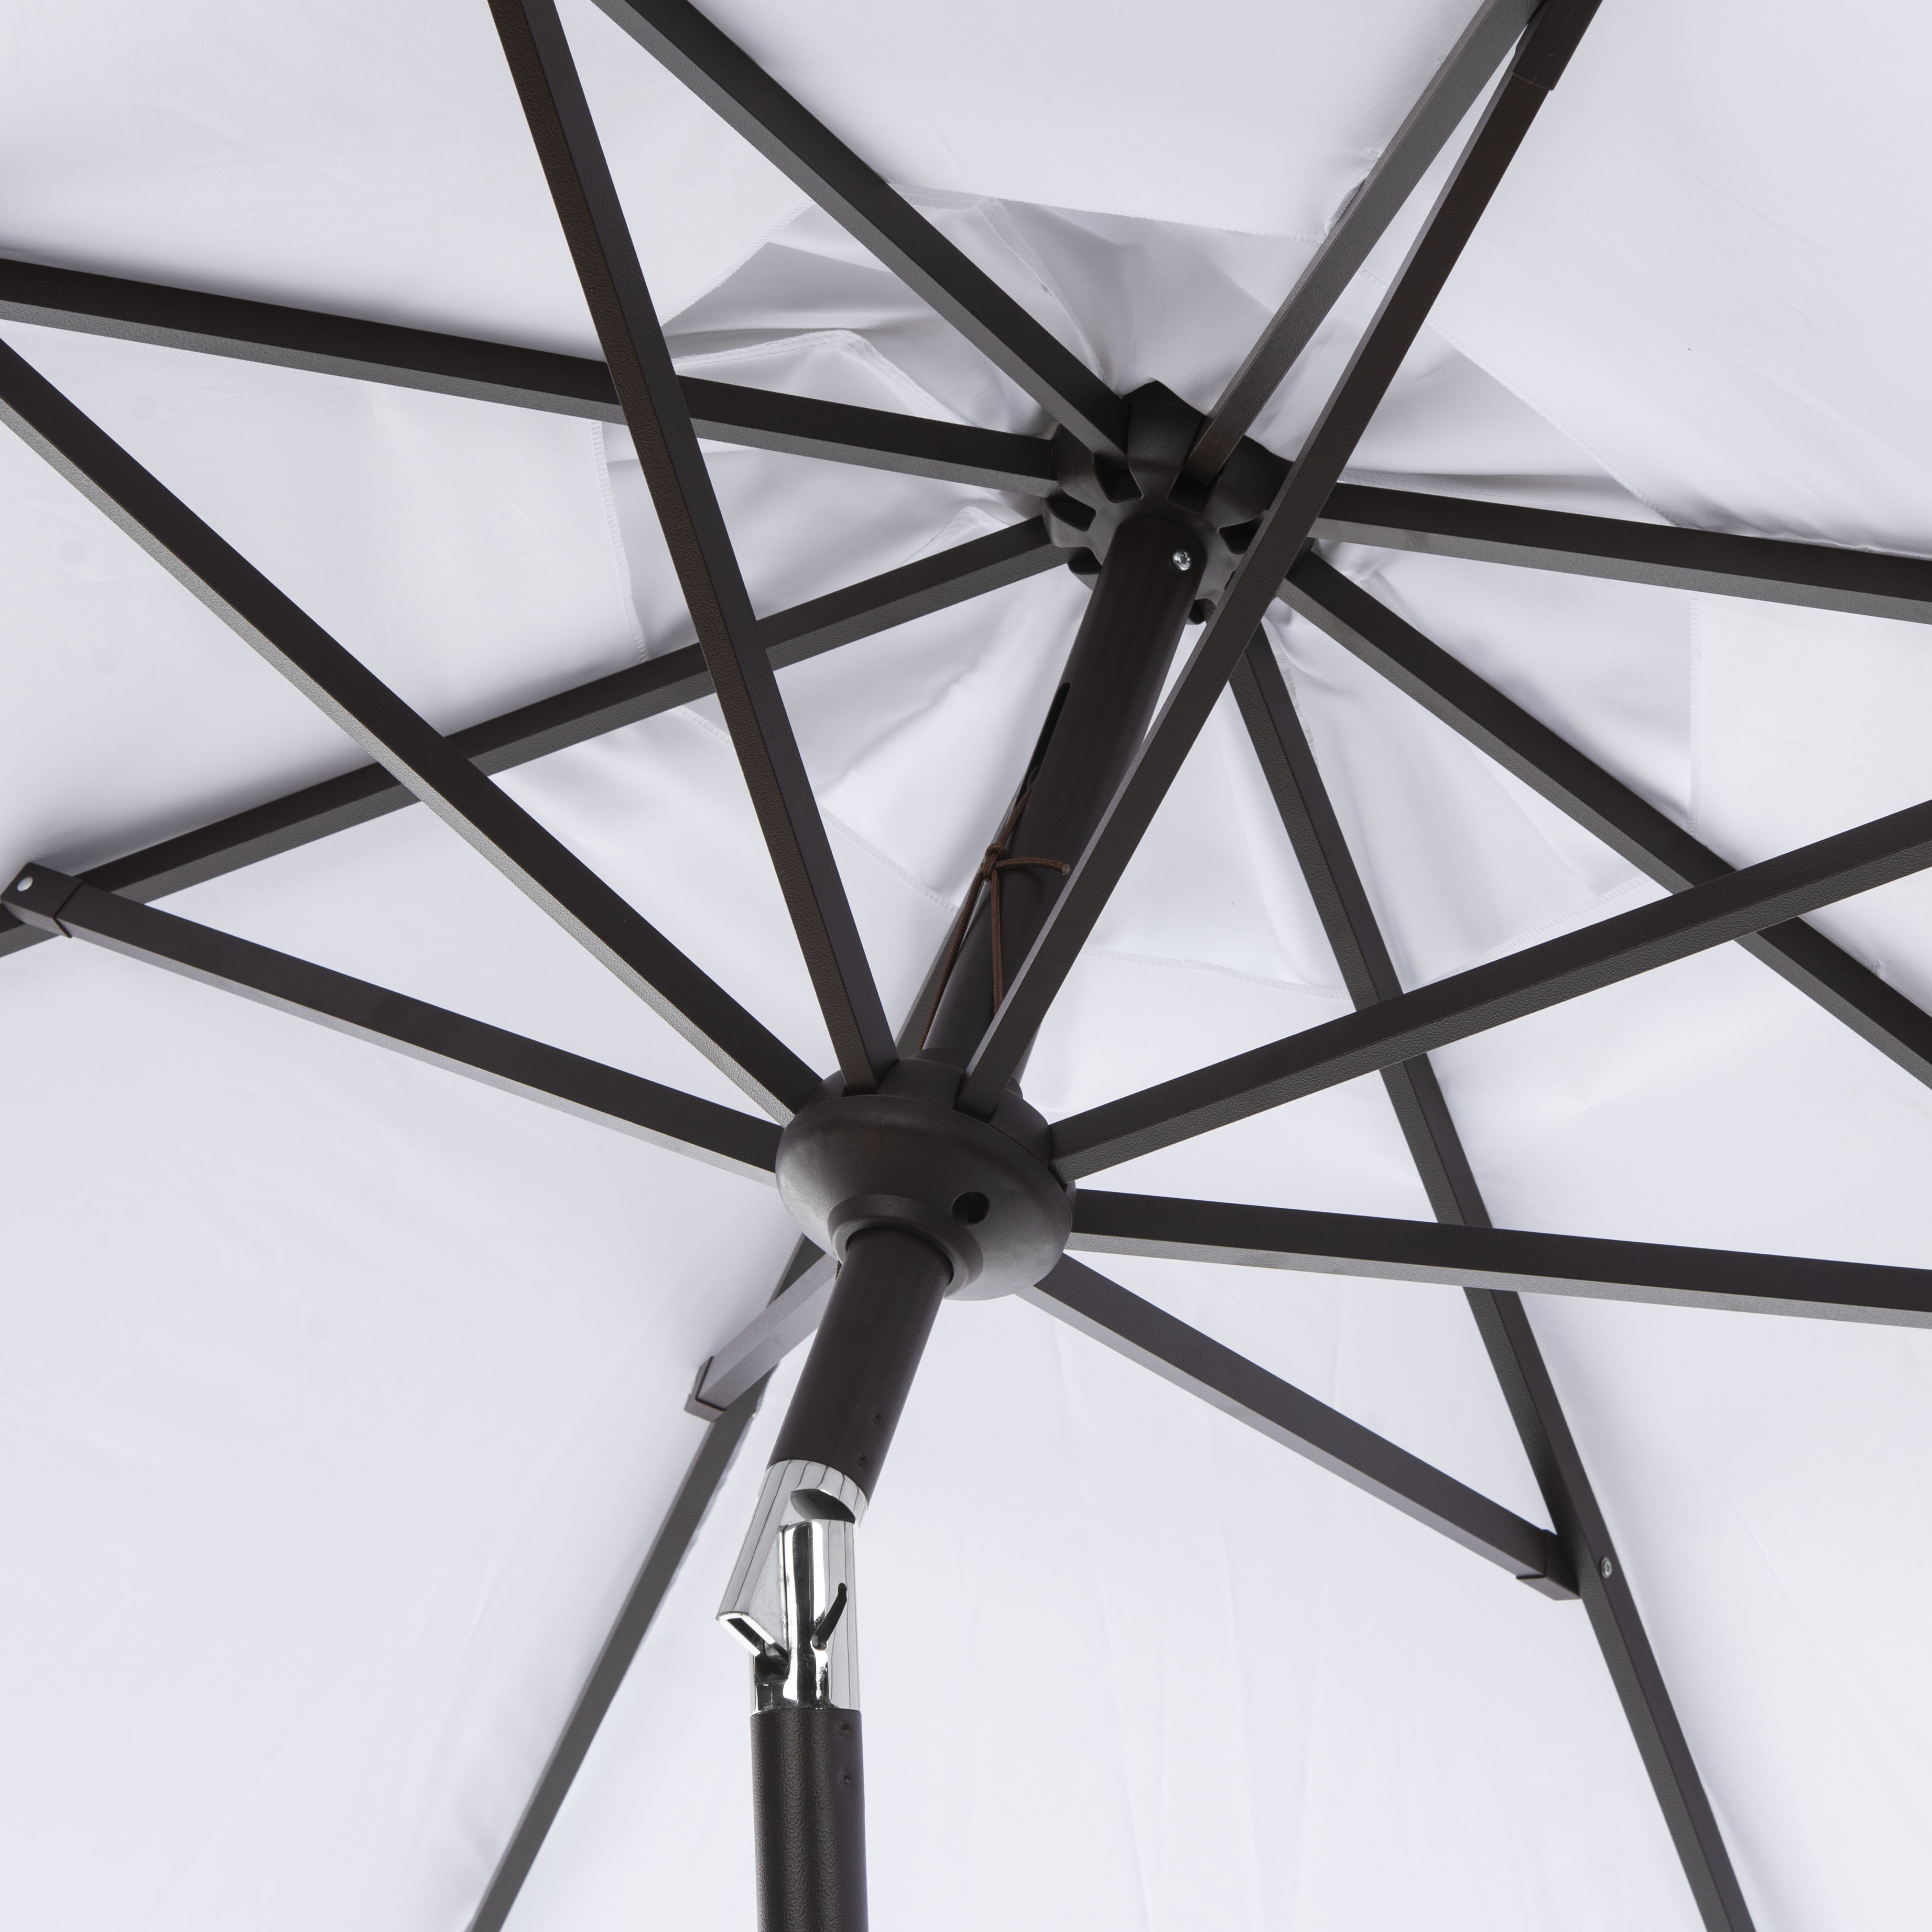 Uv Resistant Ortega 9 Ft Auto Tilt Crank Umbrella - White - Arlo Home - Image 2